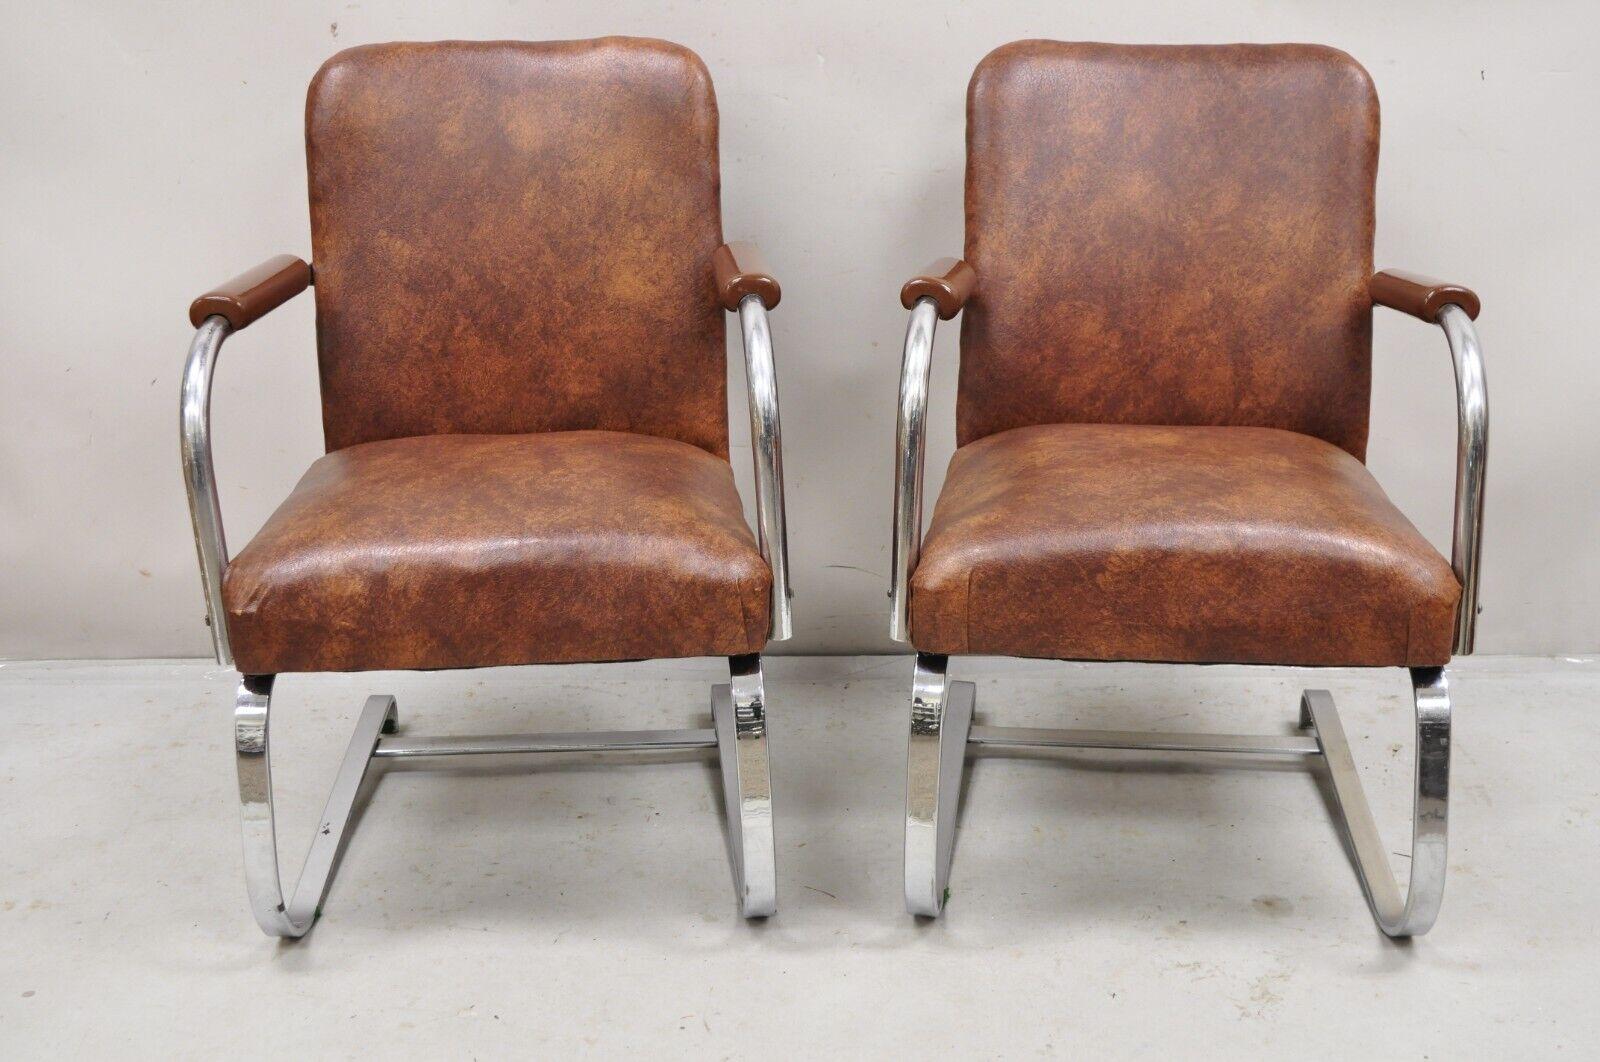 Vintage Lloyd Mfg Kem Weber Art Deco Steel Cantilever Lounge Chairs - a Pair For Sale 8